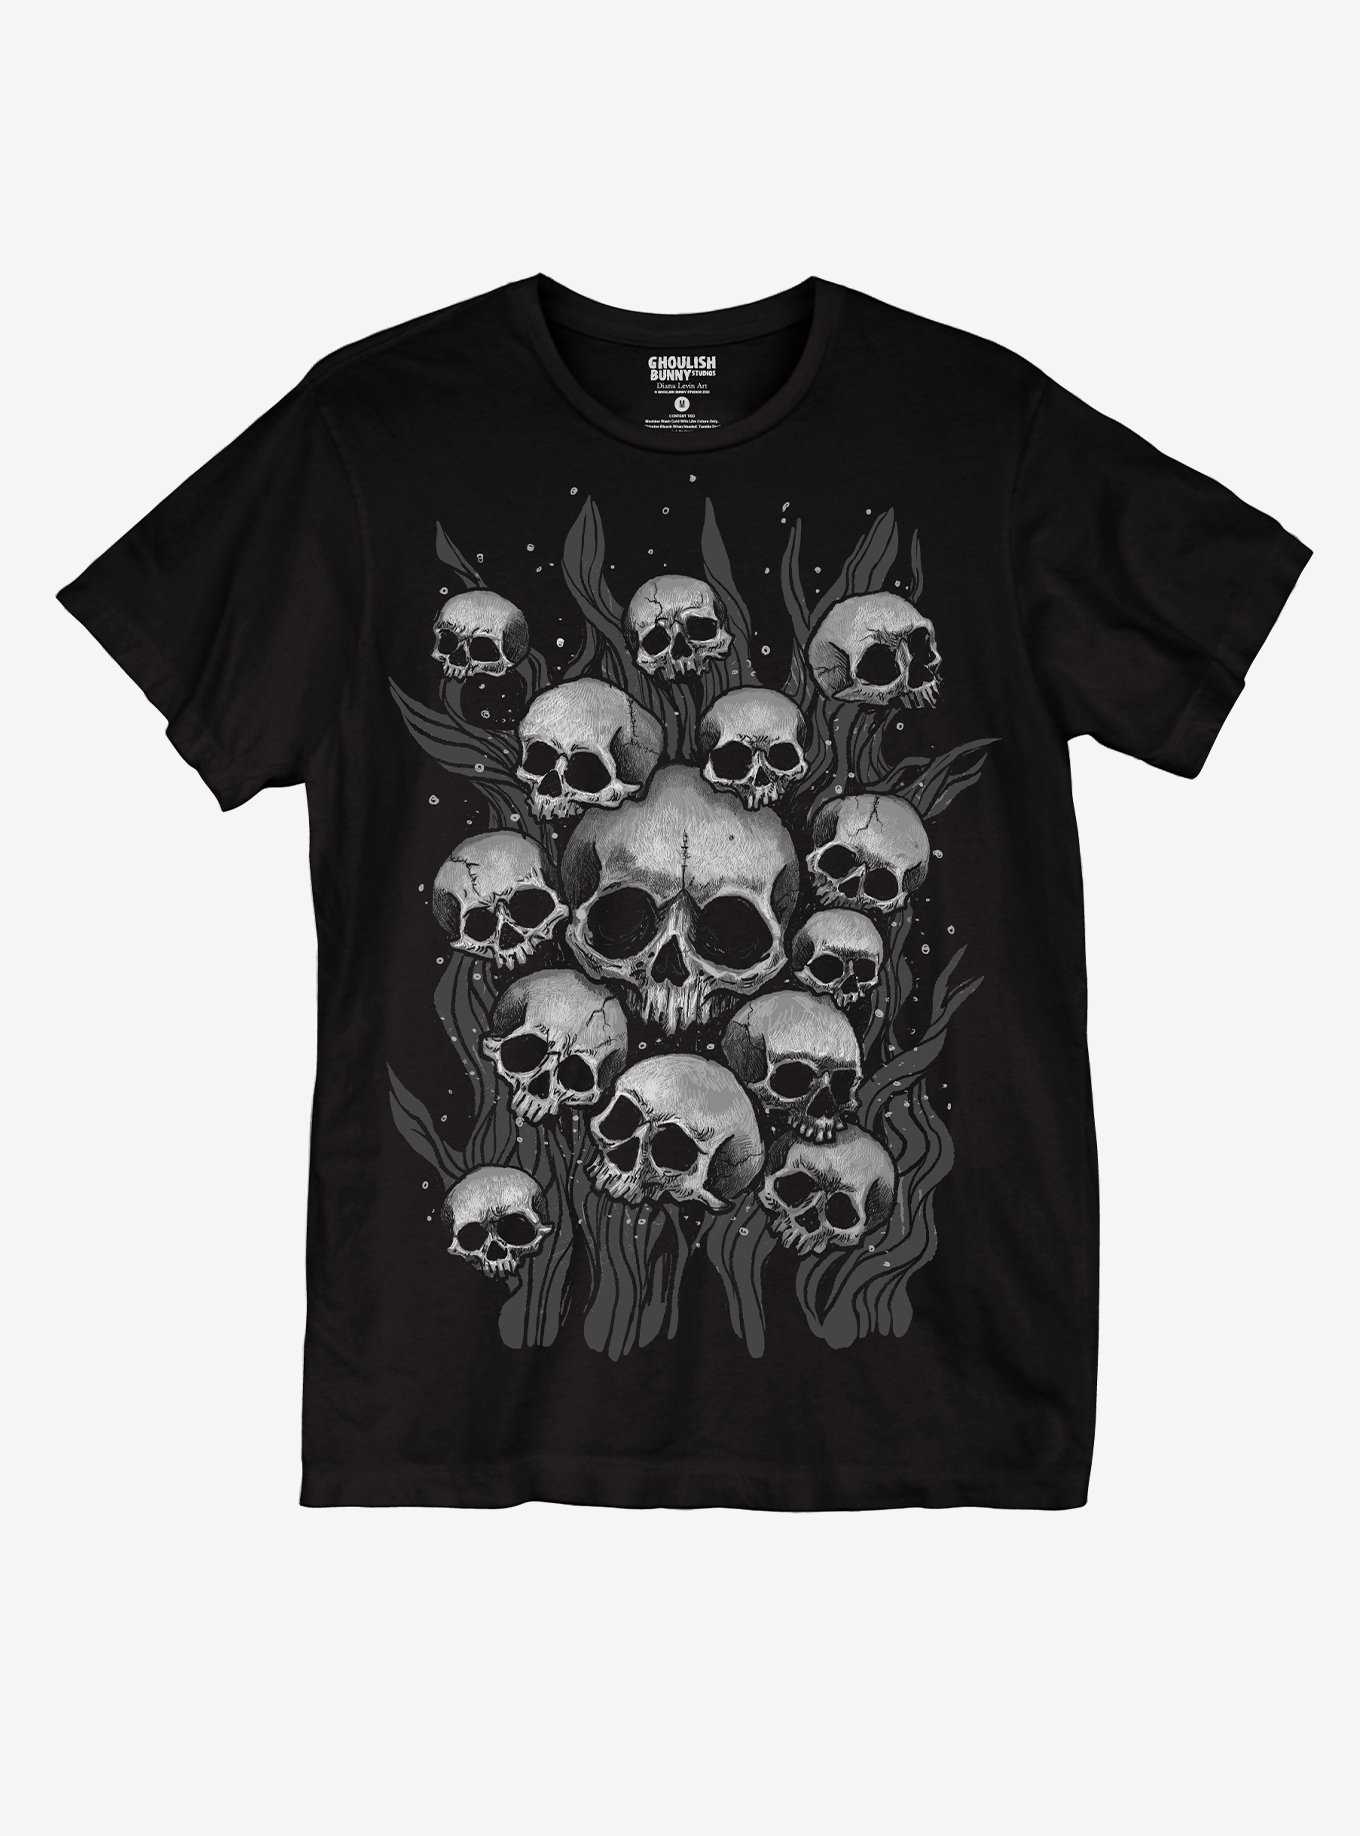 Skulls Sinking Boyfriend Fit Girls T-Shirt By Ghoulish Bunny, , hi-res